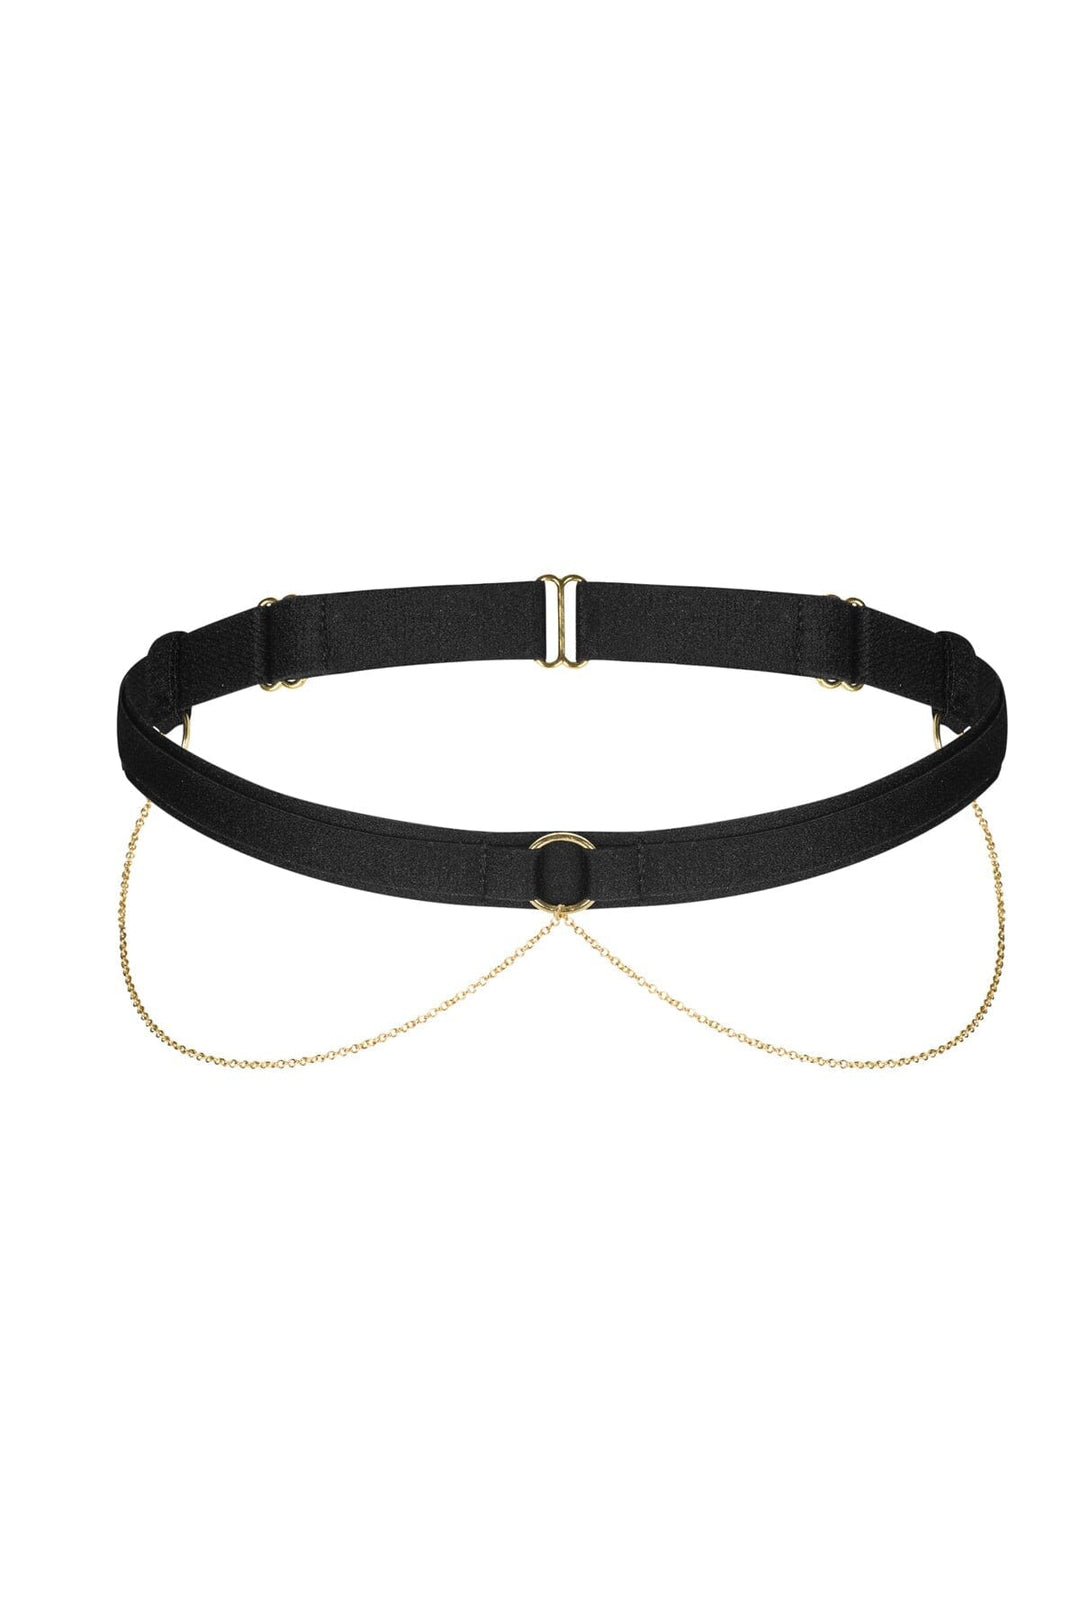 Garterbelt with Gold Chain Detail-Fetish Garter Belts-Noir Handmade-Black-O/S-SEXYSHOES.COM